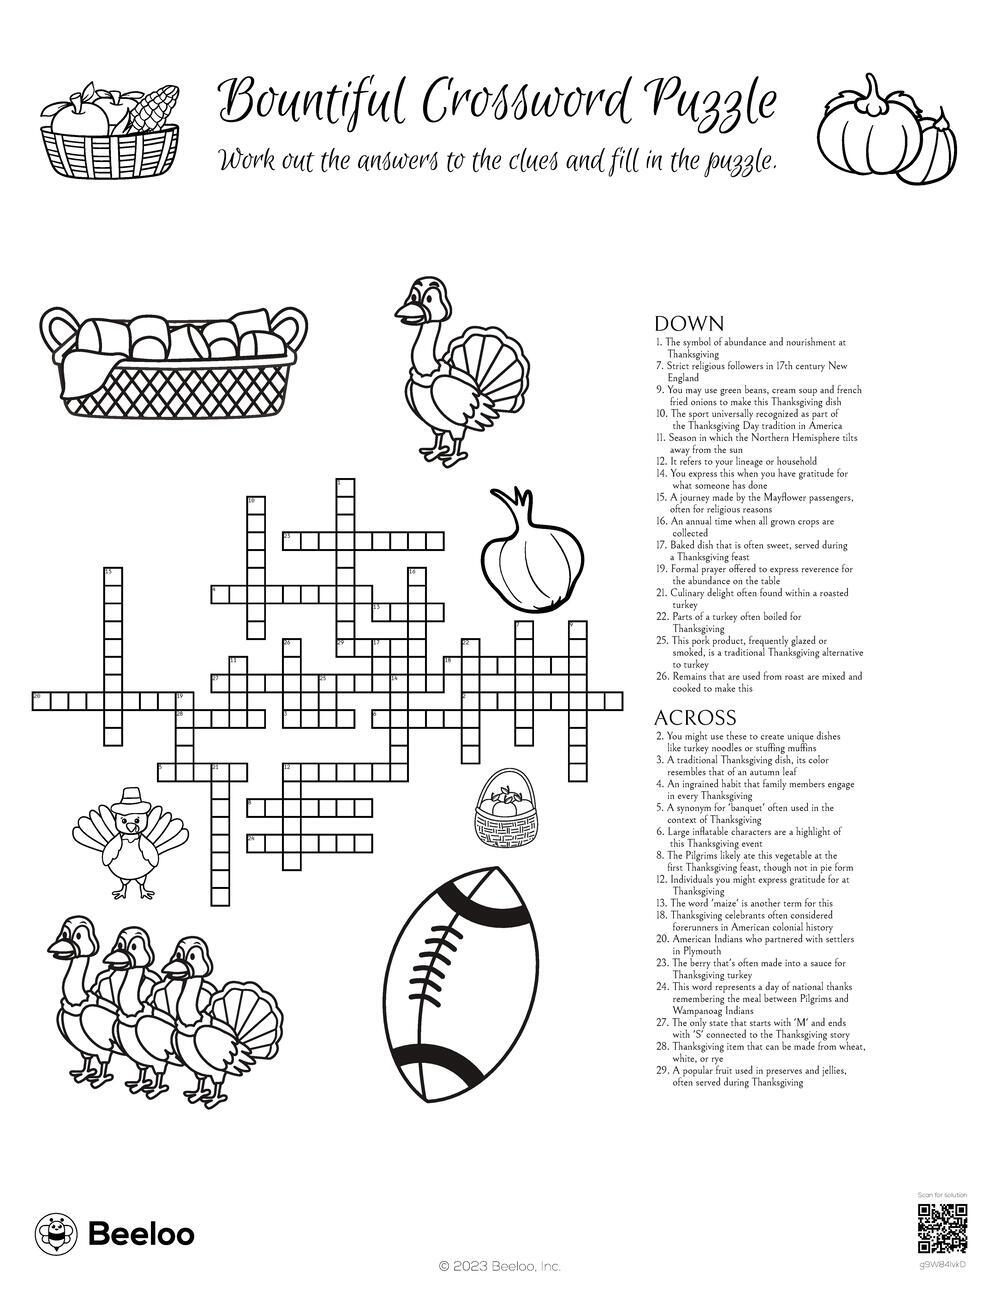 ingrained crossword clue 4 6